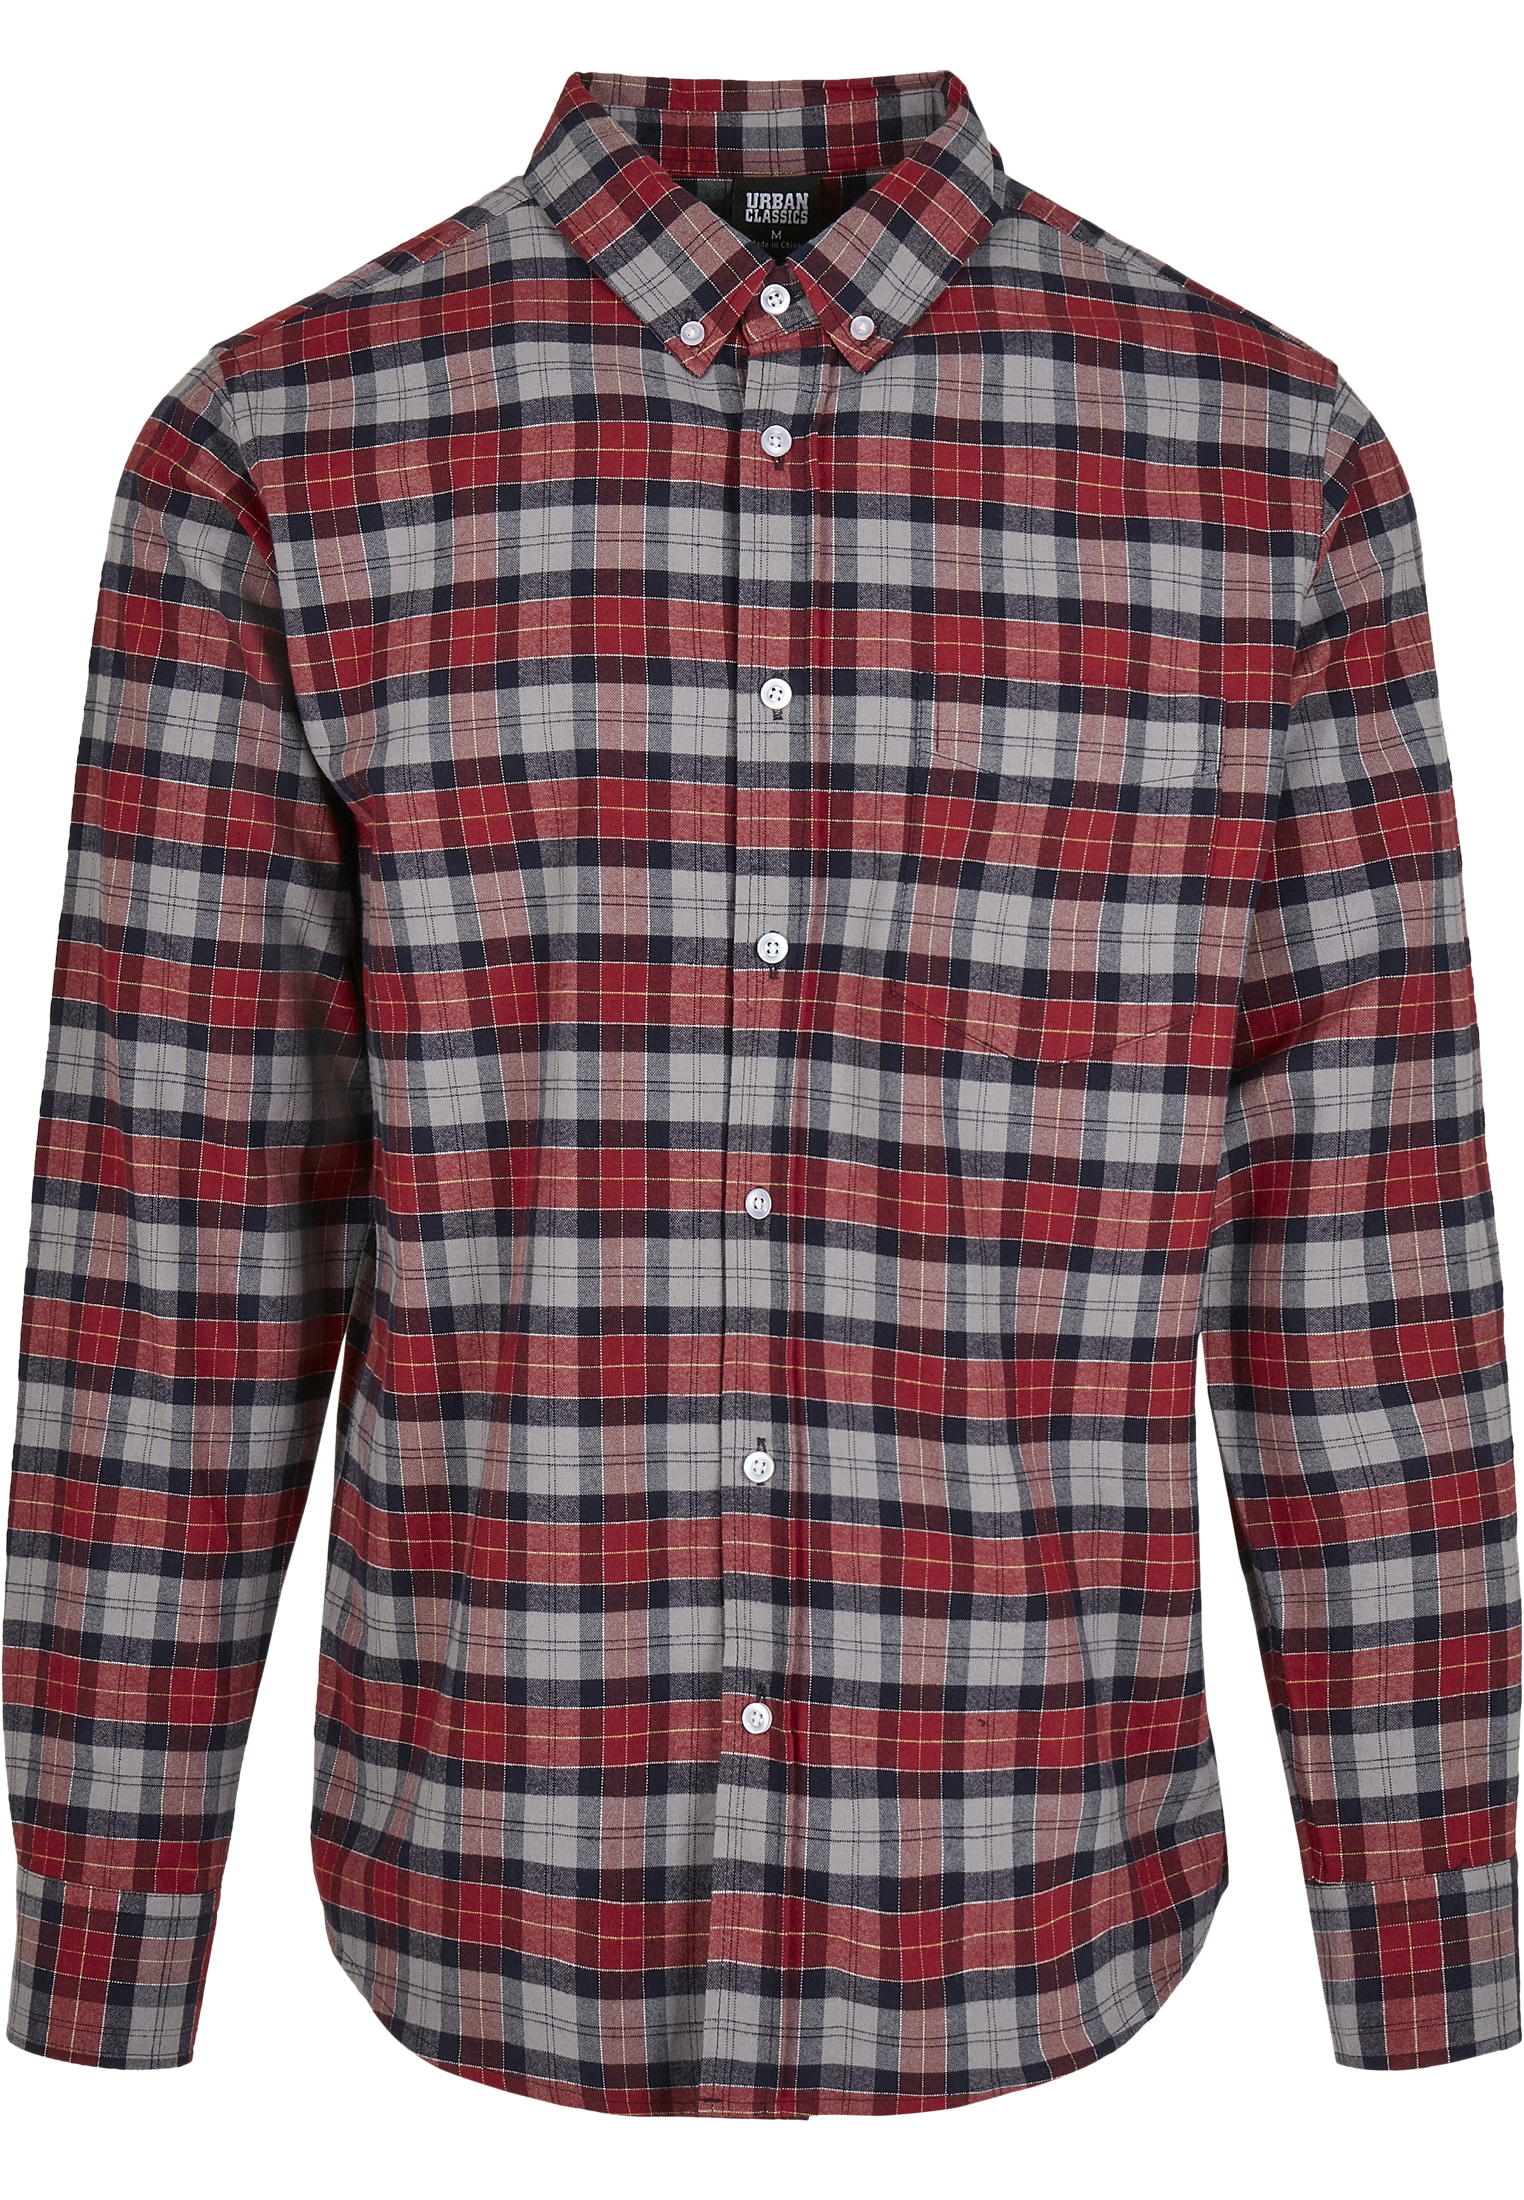 Hemden Plaid Cotton Shirt in Farbe asphalt/red